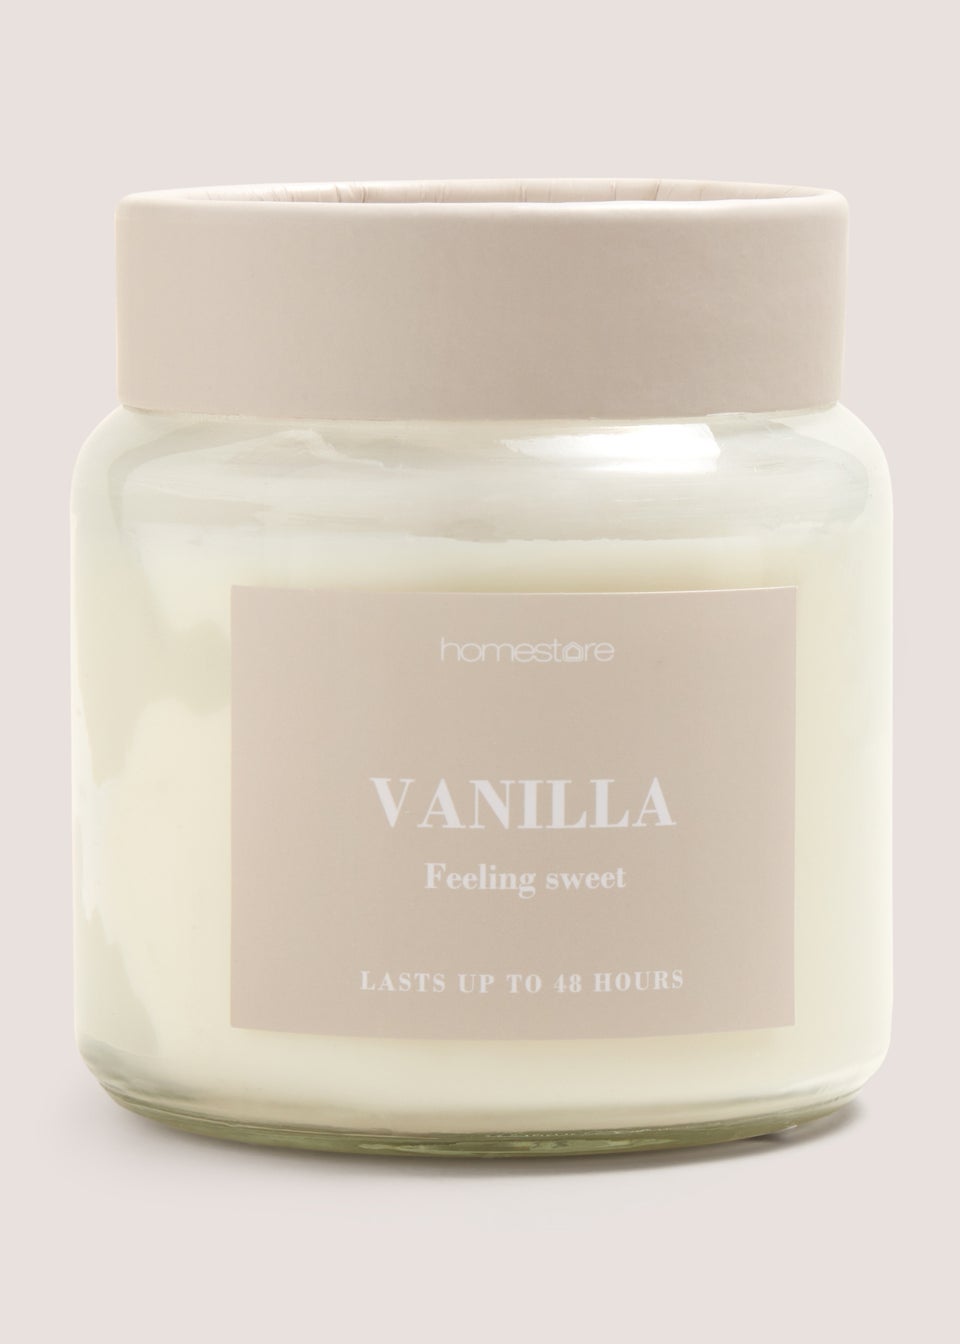 Vanilla Scented Jar Candle (340g)